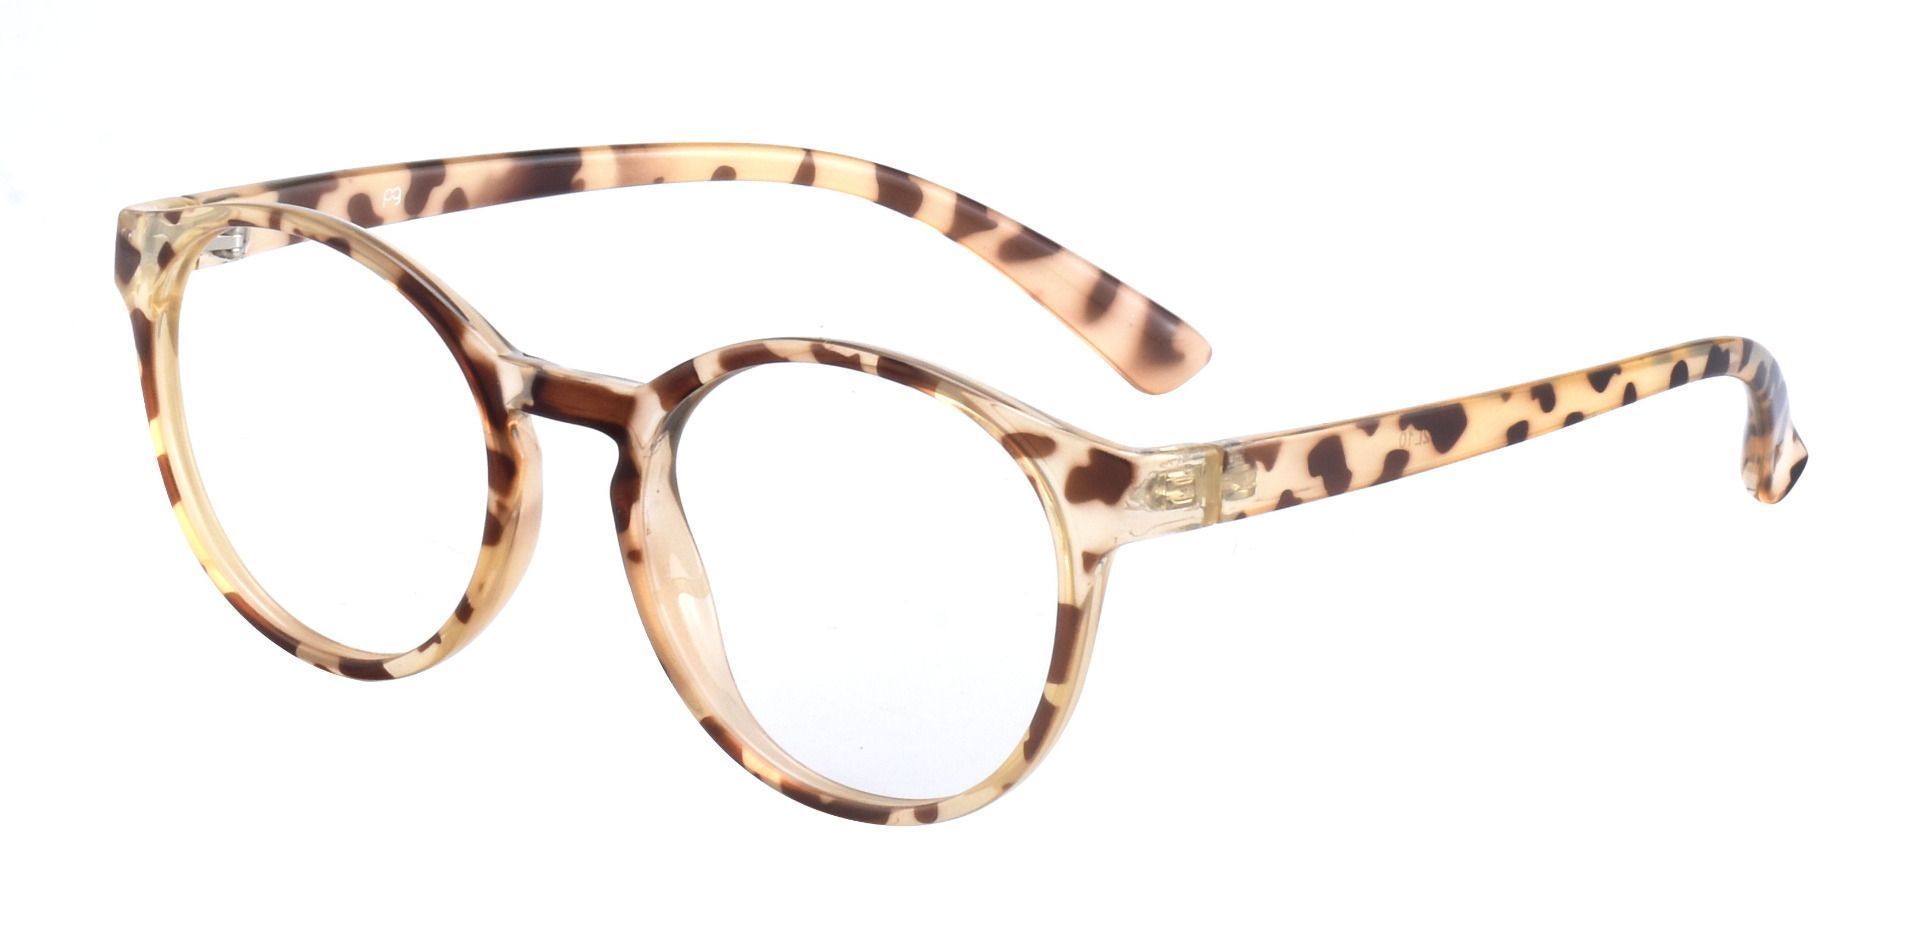 Safari Oval Prescription Glasses - Crystal Brown Cheetah Print